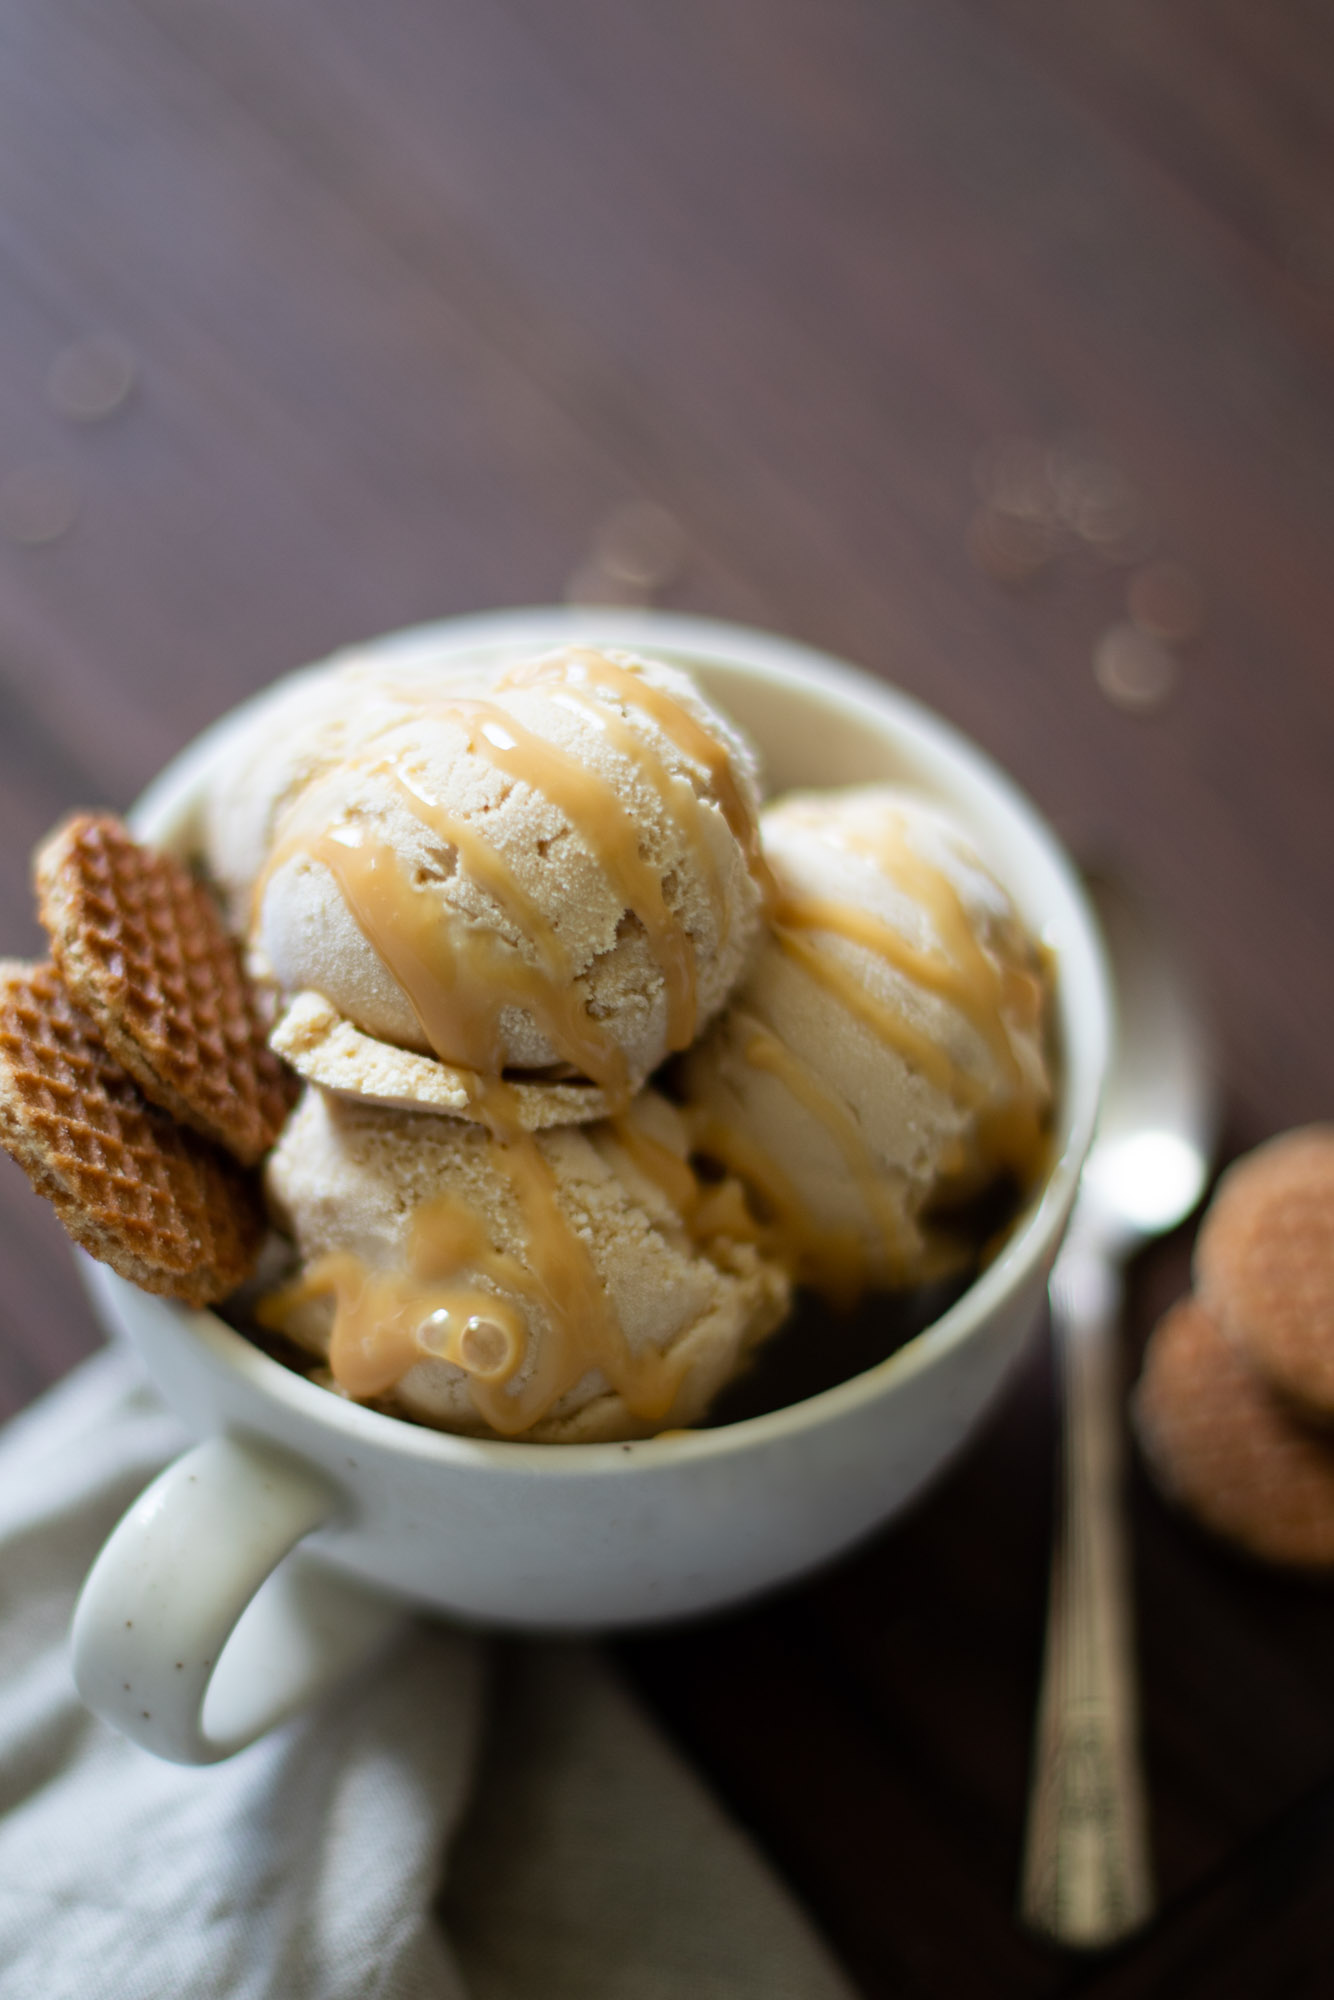 https://anyascookbook.com/wp-content/uploads/2020/06/Vanilla-Chai-Ice-Cream-in-a-Bowl-Final.jpg